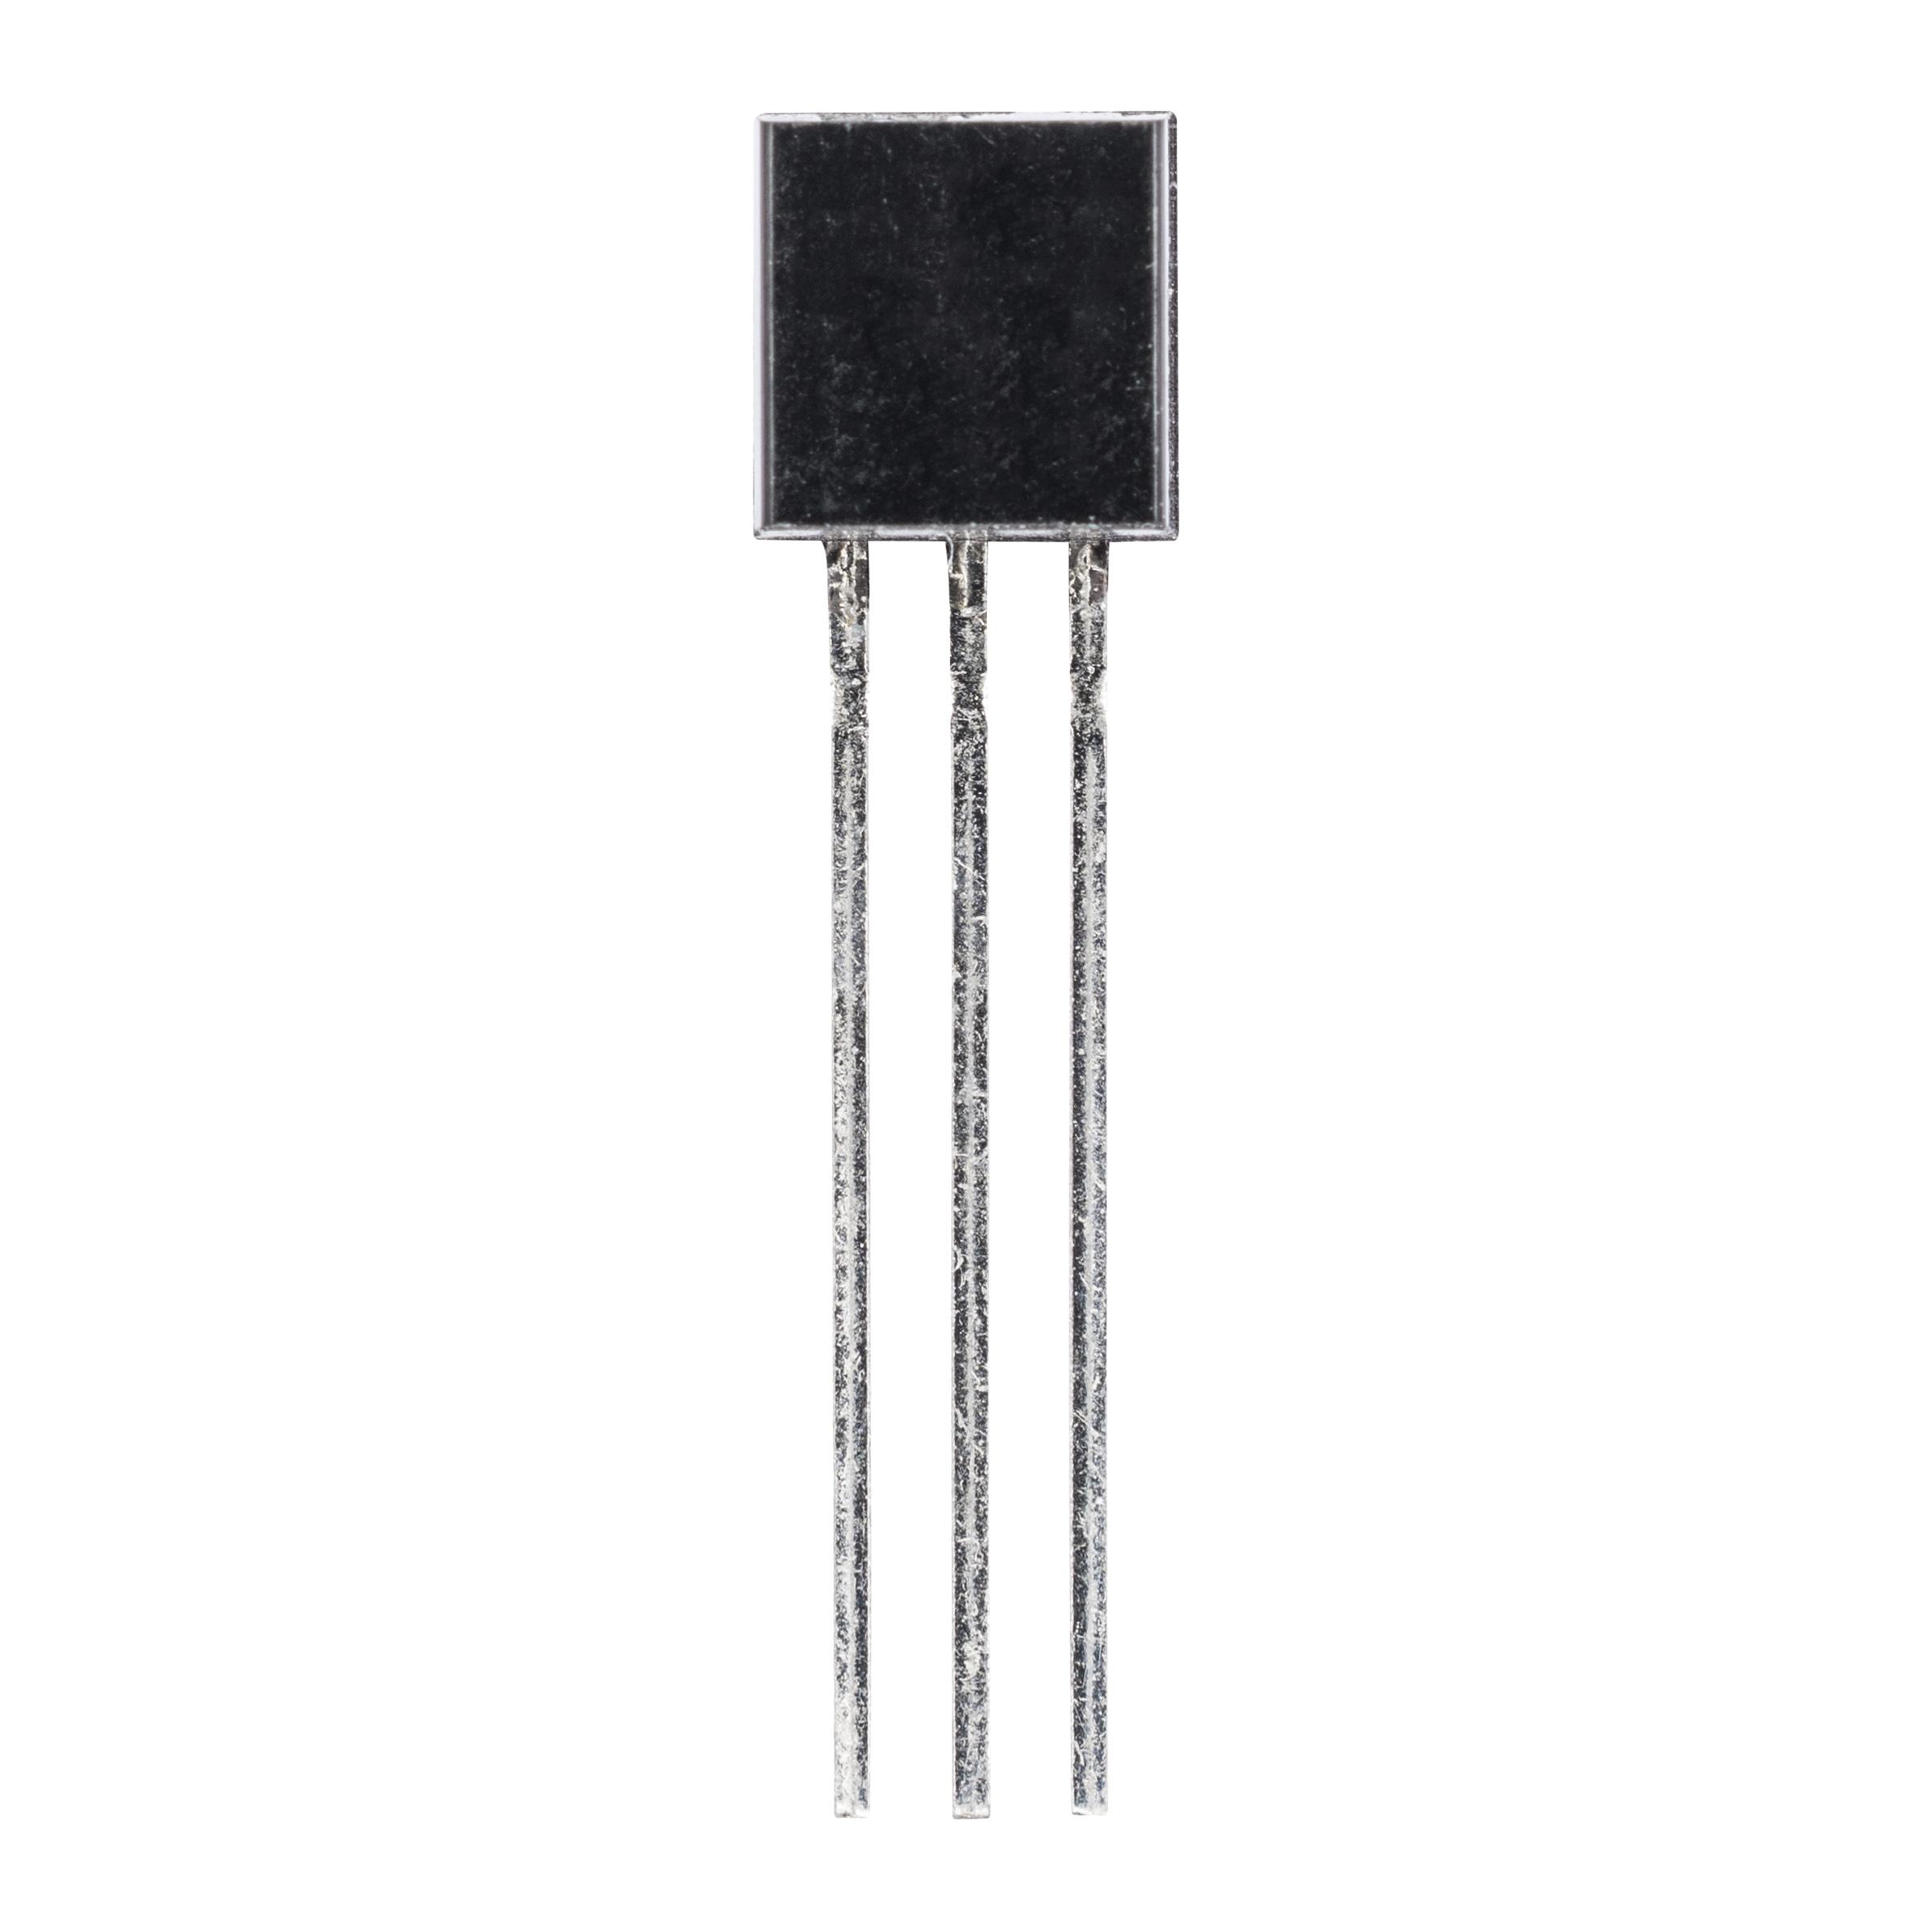 2N5551 (Bipolartransistor NPN)